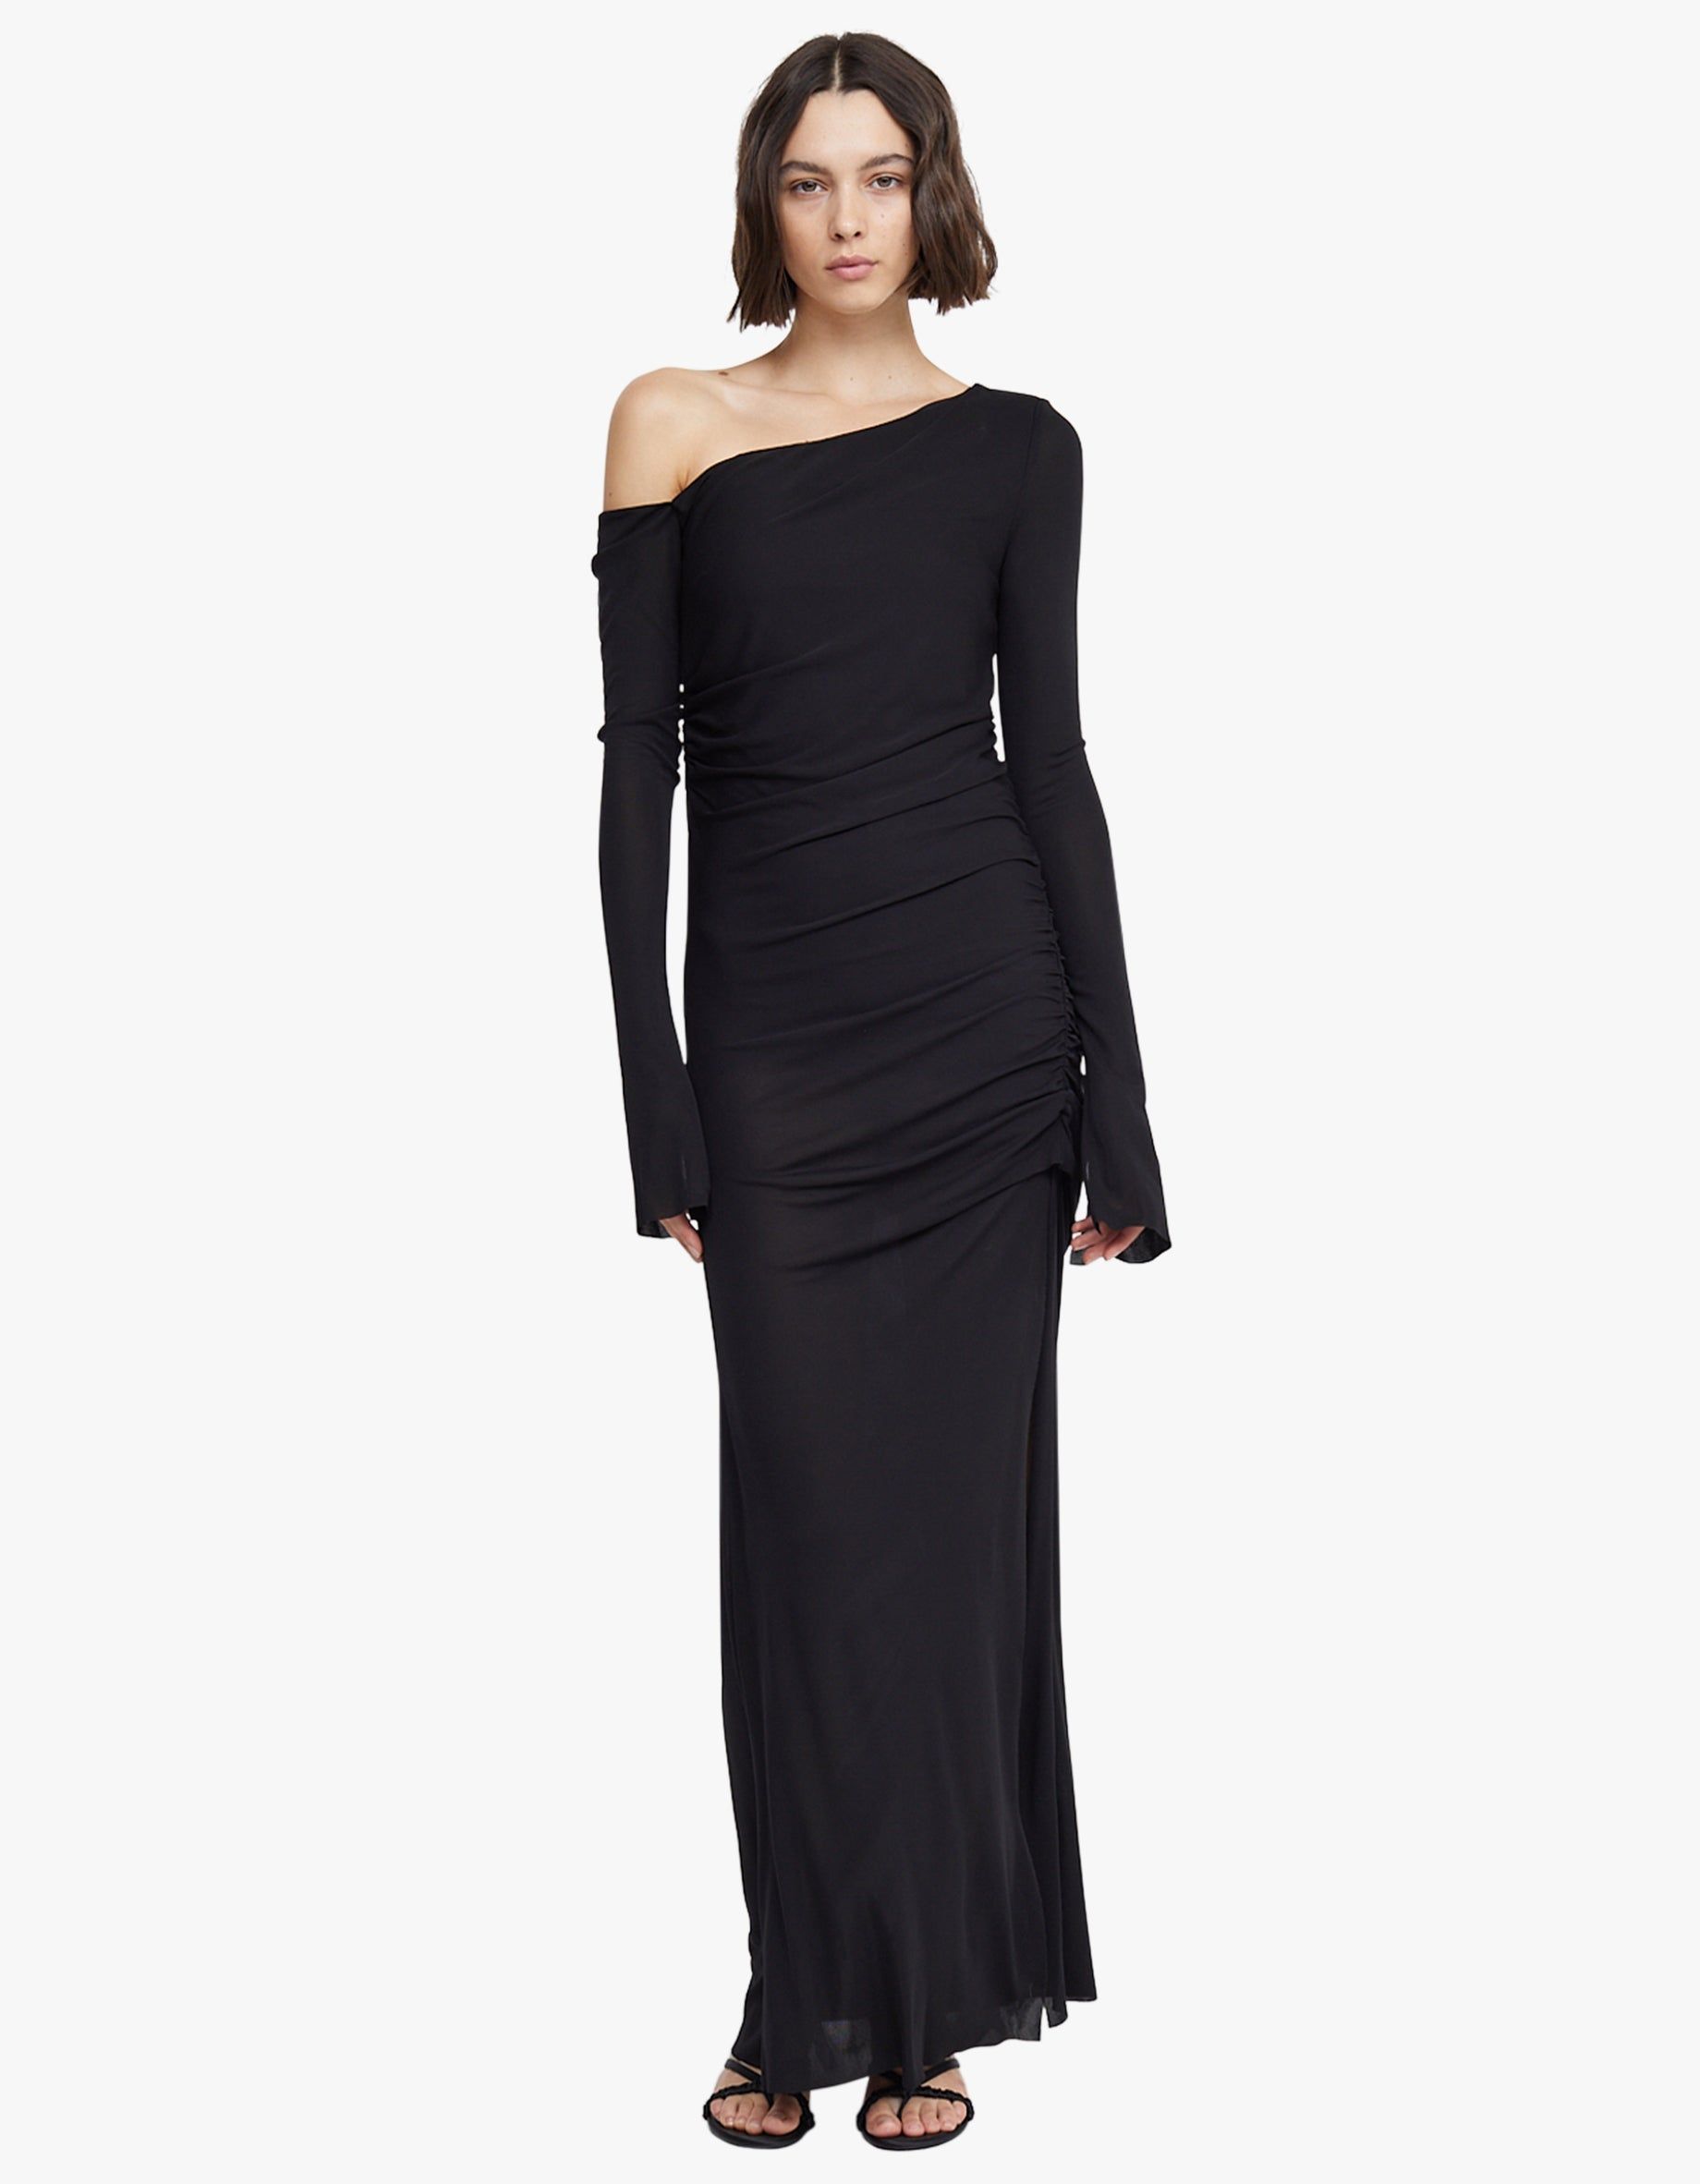 Black Floor Length Dress